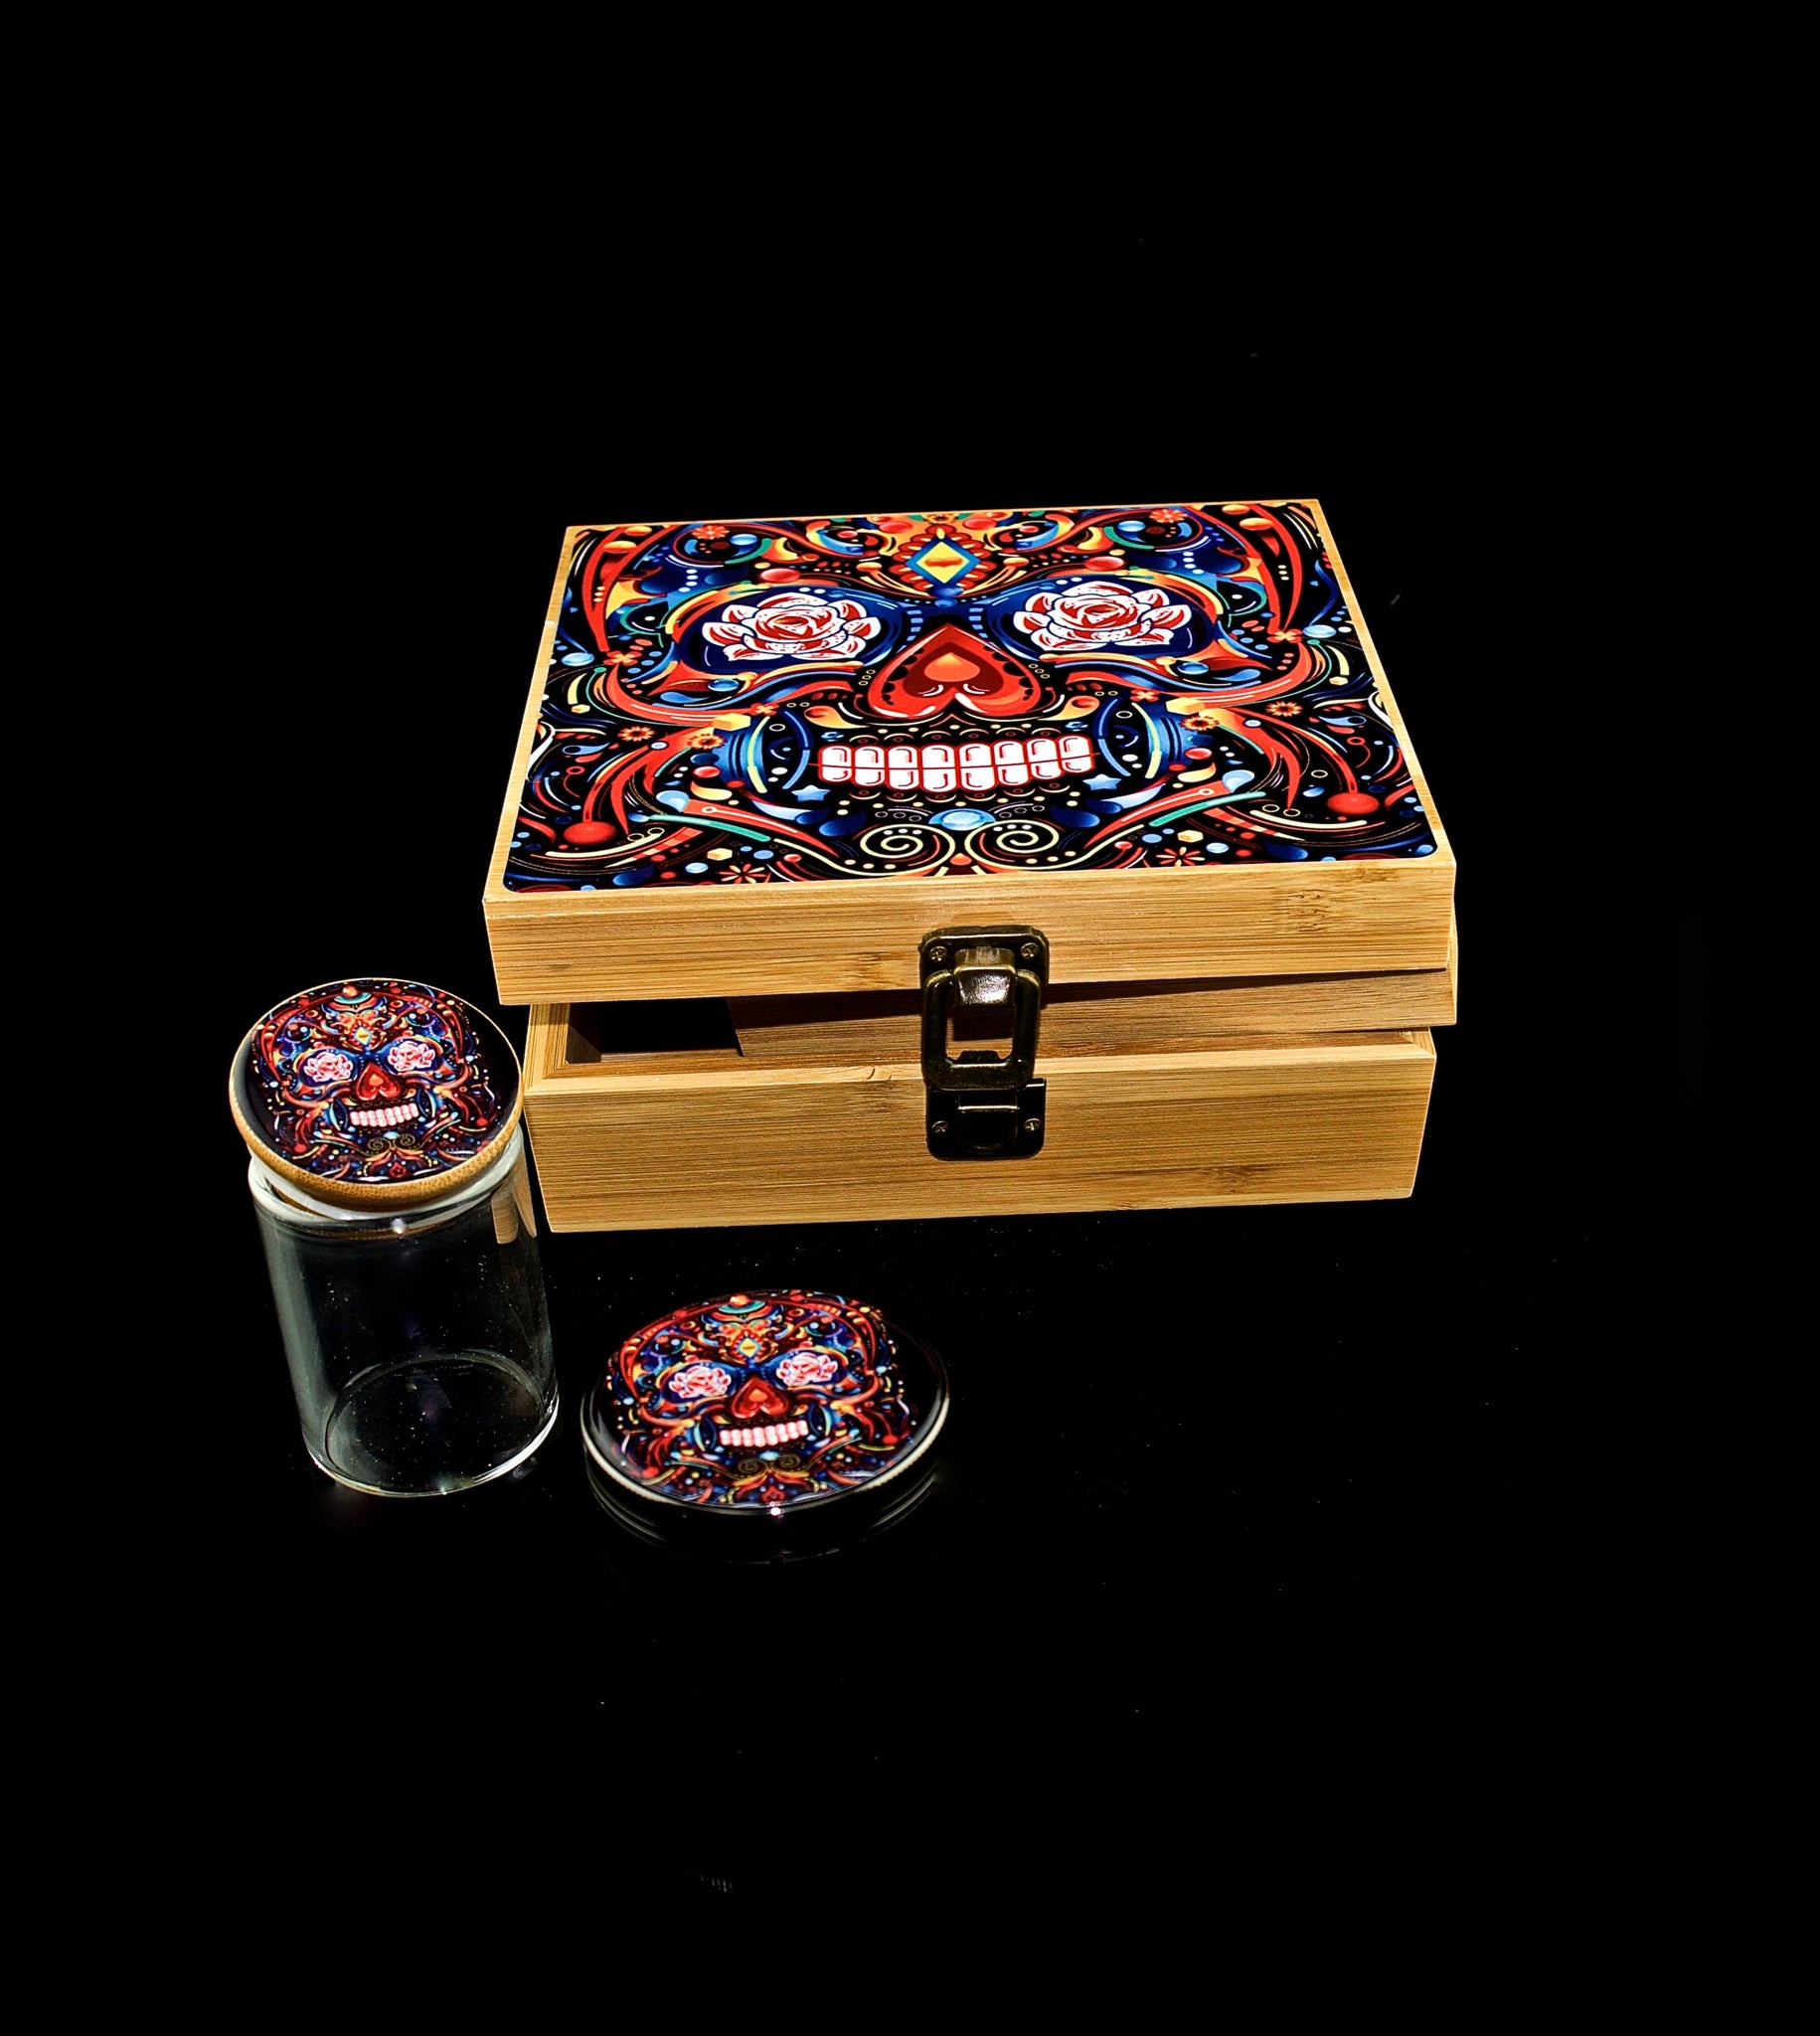 StashAM Stash Box Combo with Grinder - Includes Zinc Alloy 4 Part Herb Grinder, Smell Proof Airtight Glass Stash Jar & Embossed Wood Stash Box (Black)-1375